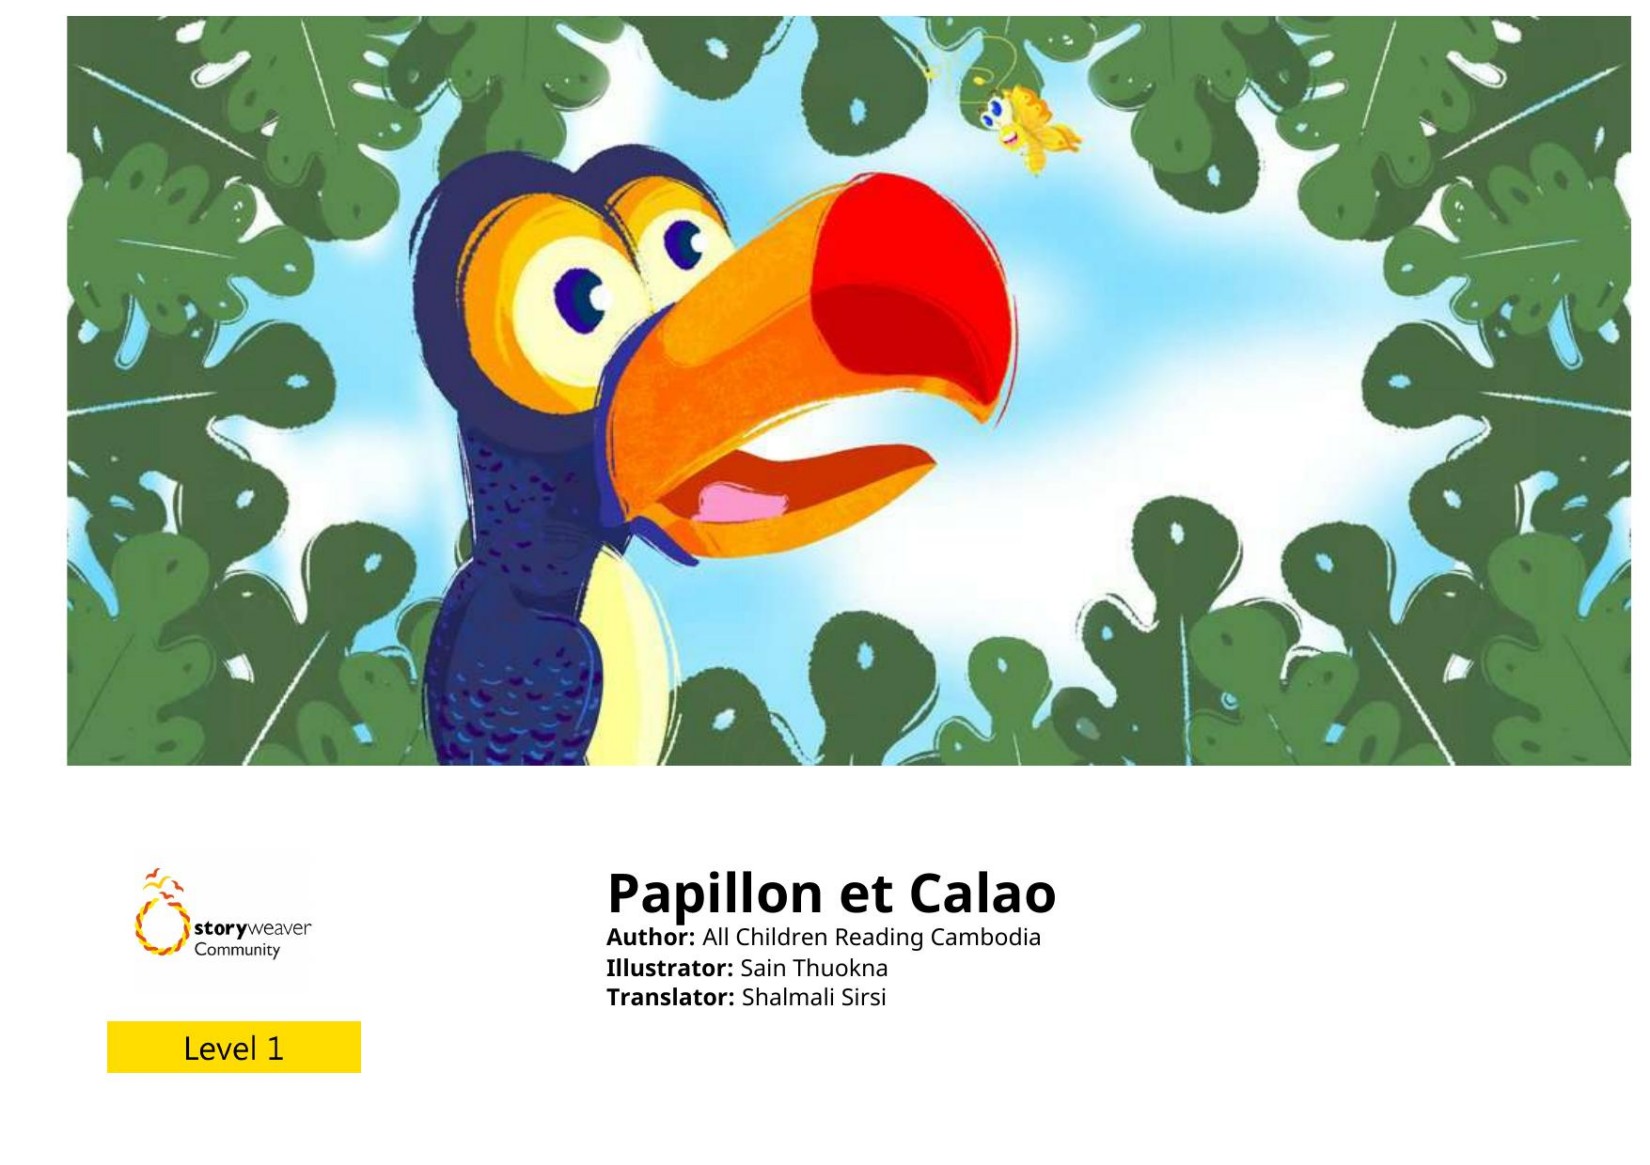 Papillon et Calao